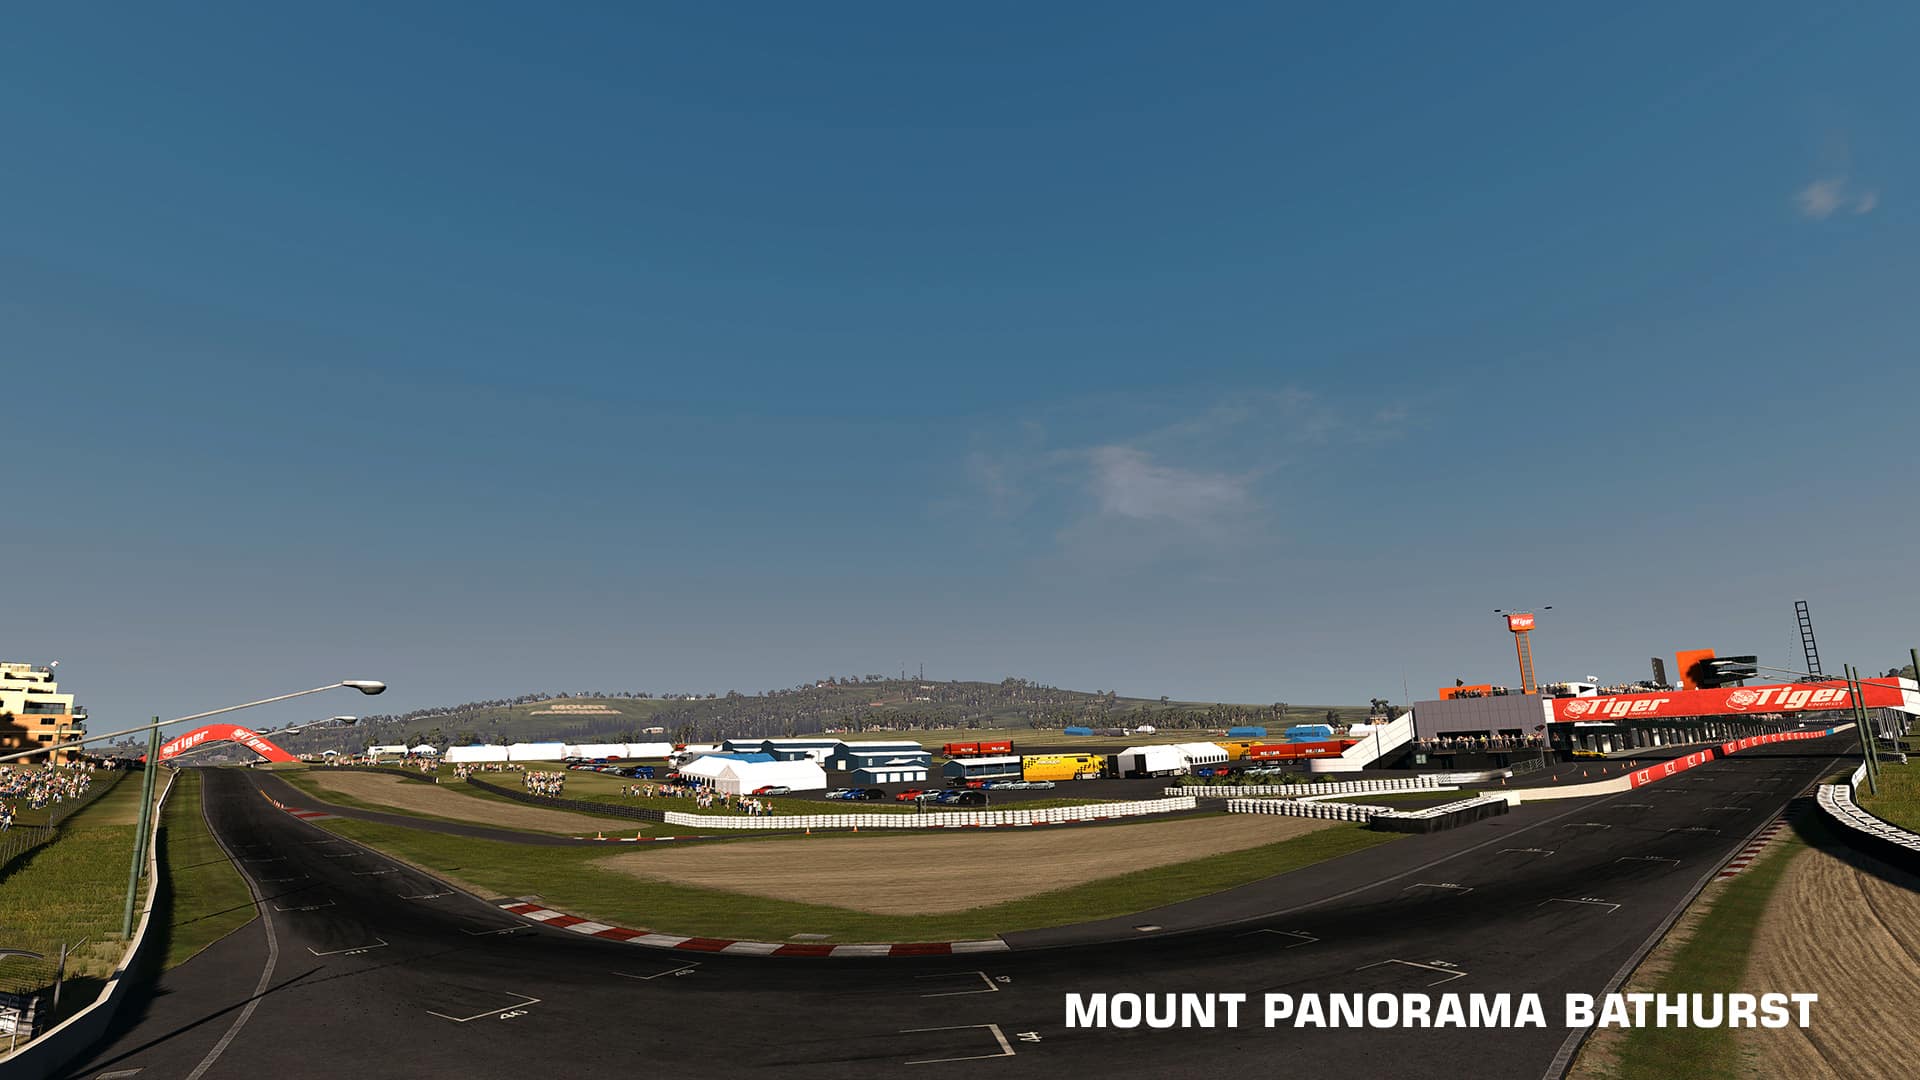 project-cars-mount-panorama-bathurst-track